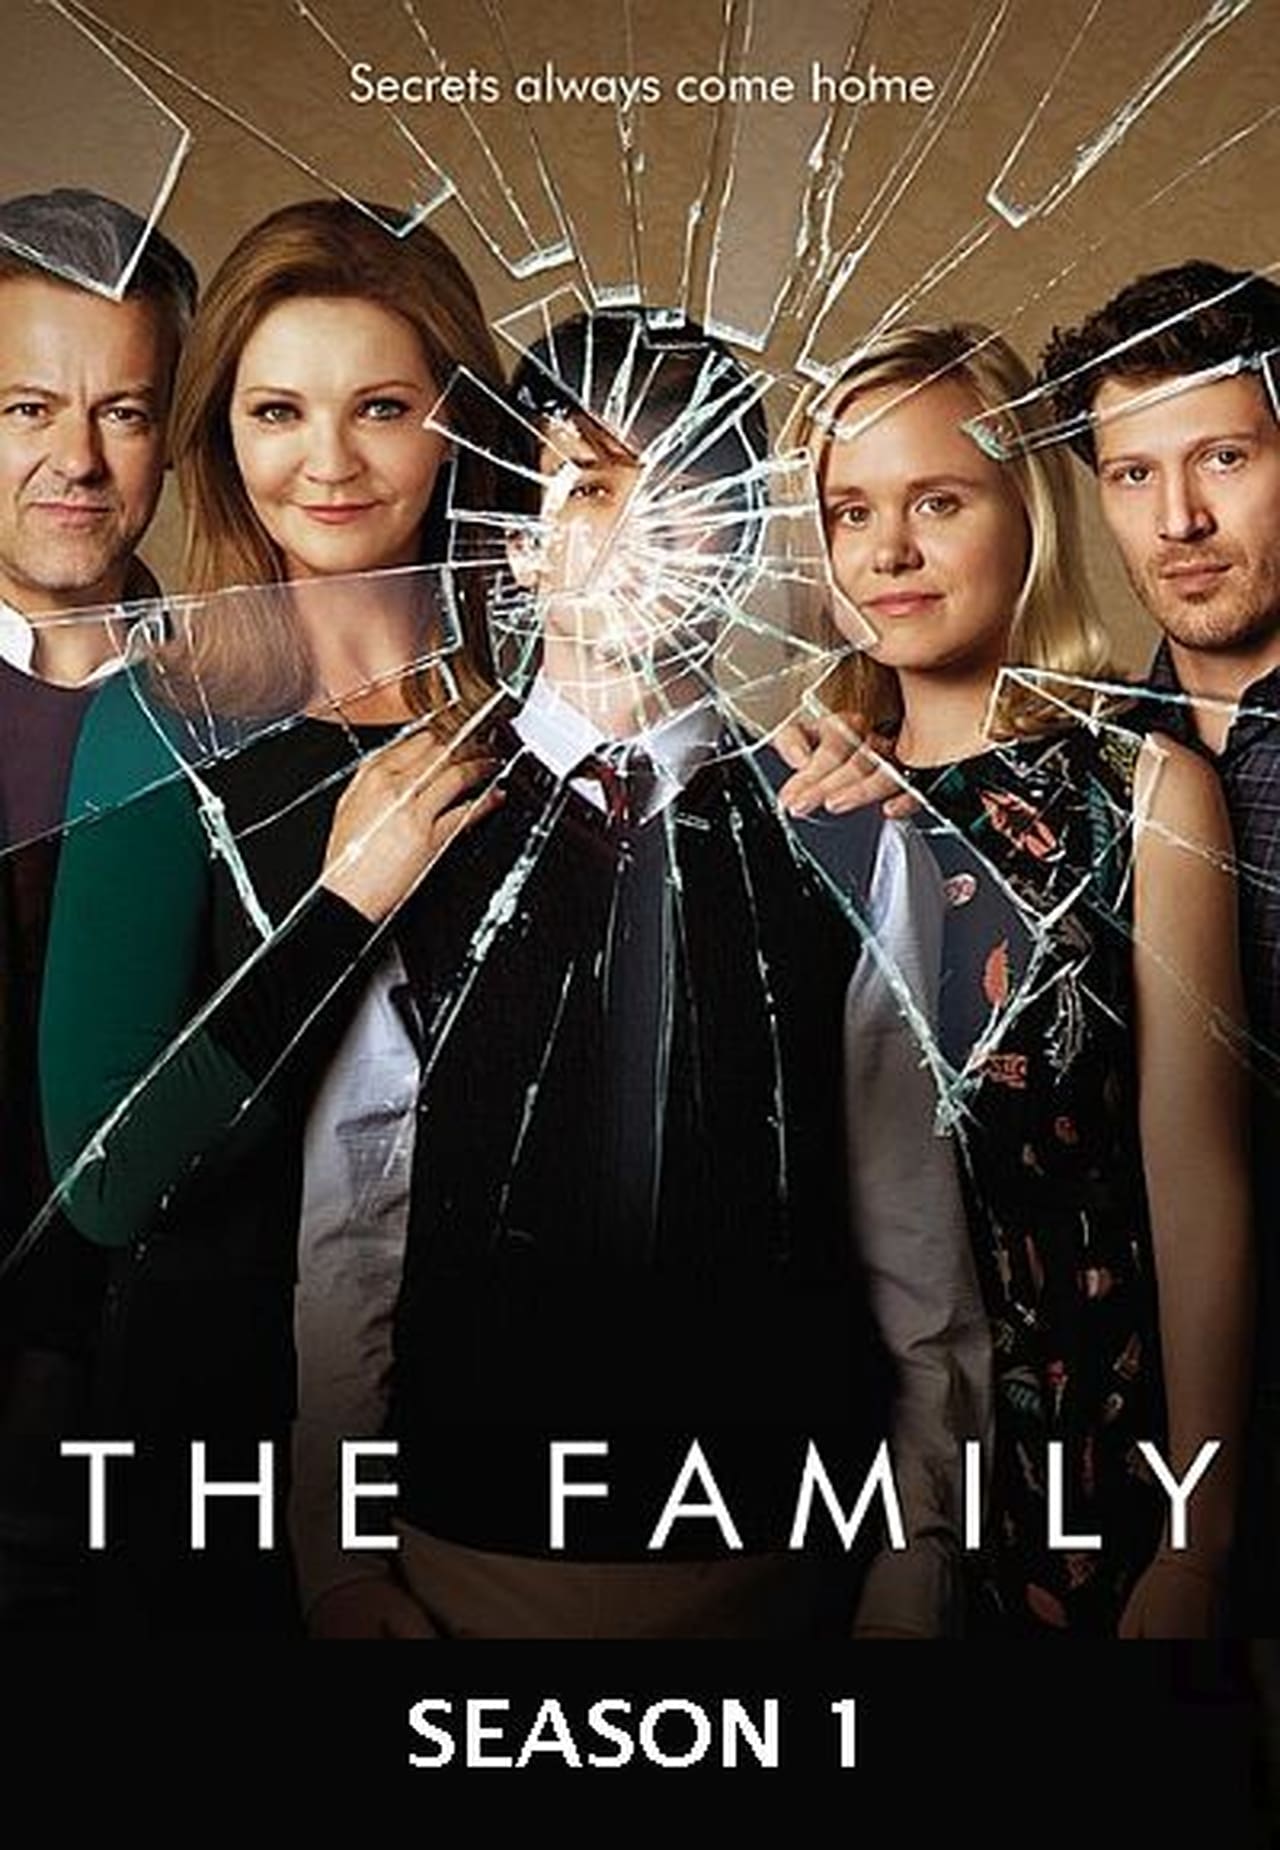 The Family Season 1